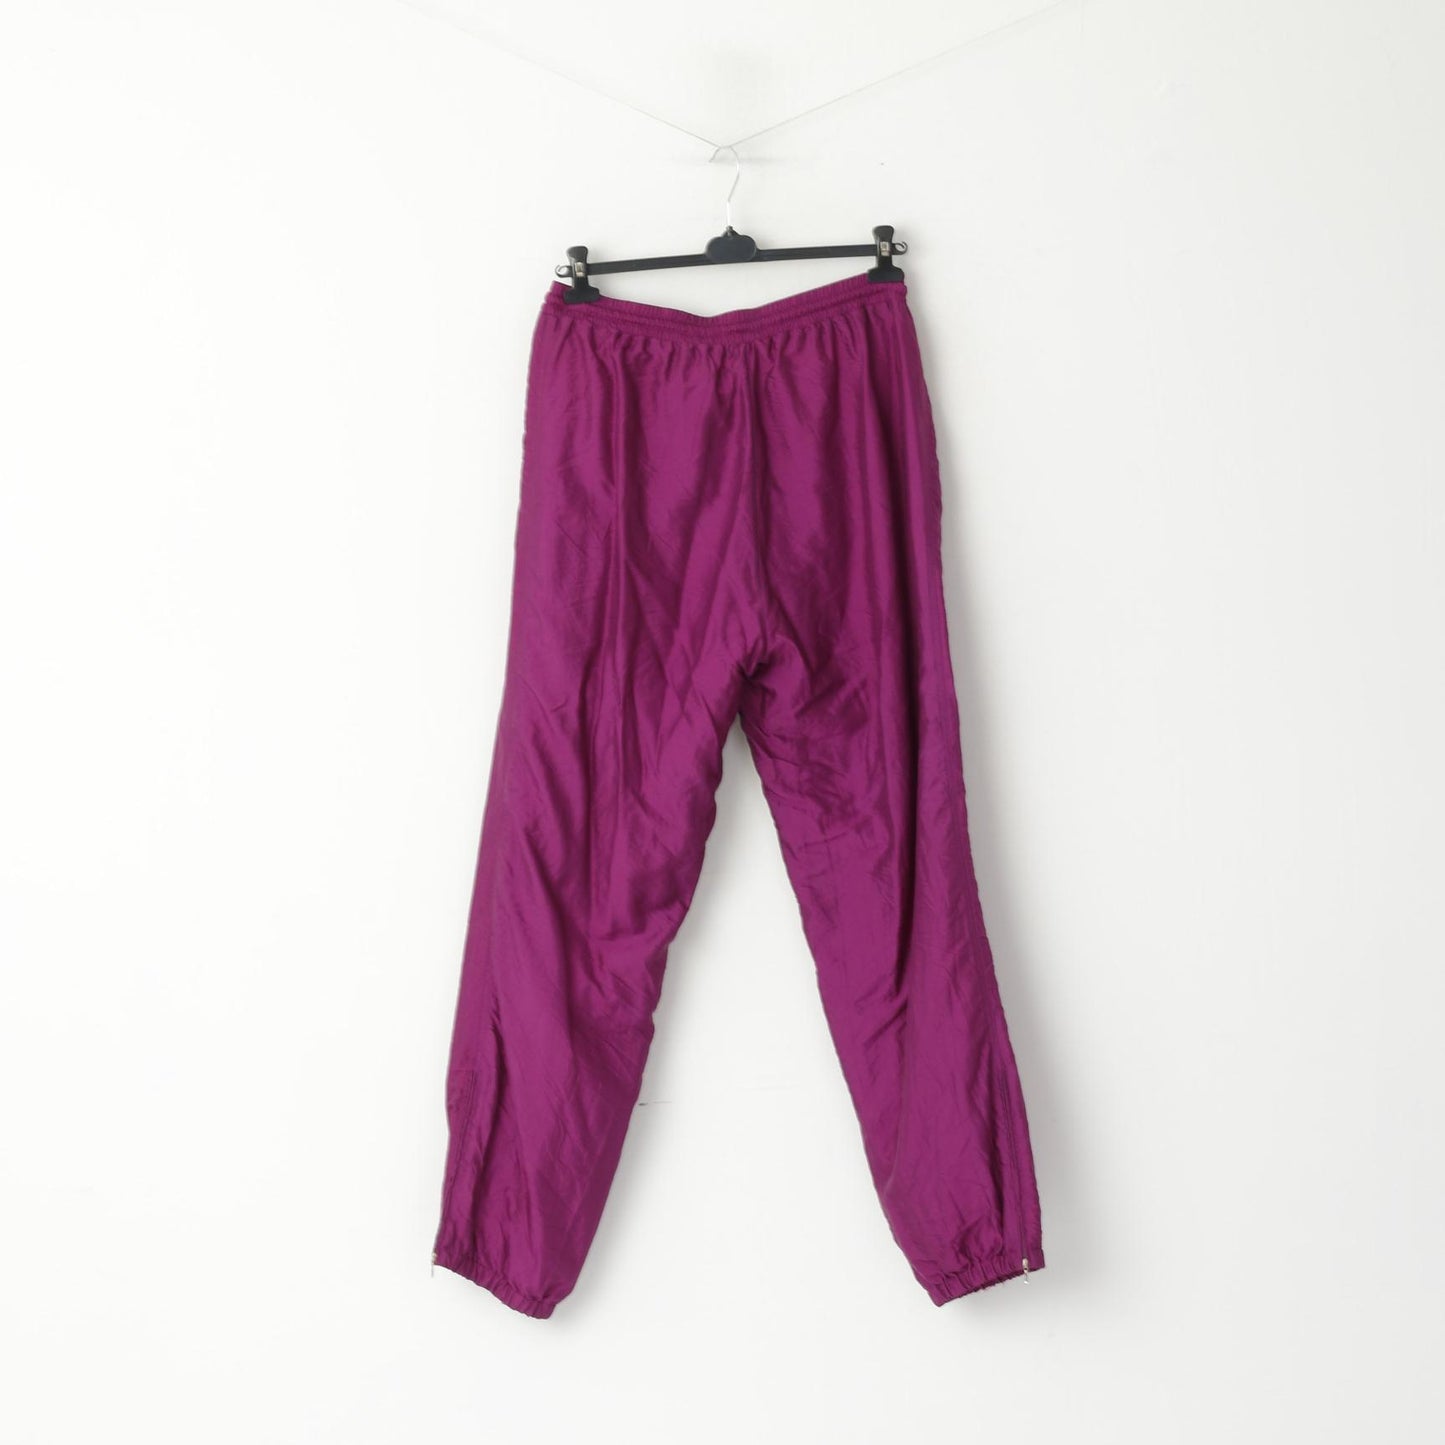 Head Men XL Sweatapants Purple Shiny Retro Gym Sportswear Track Bottoms